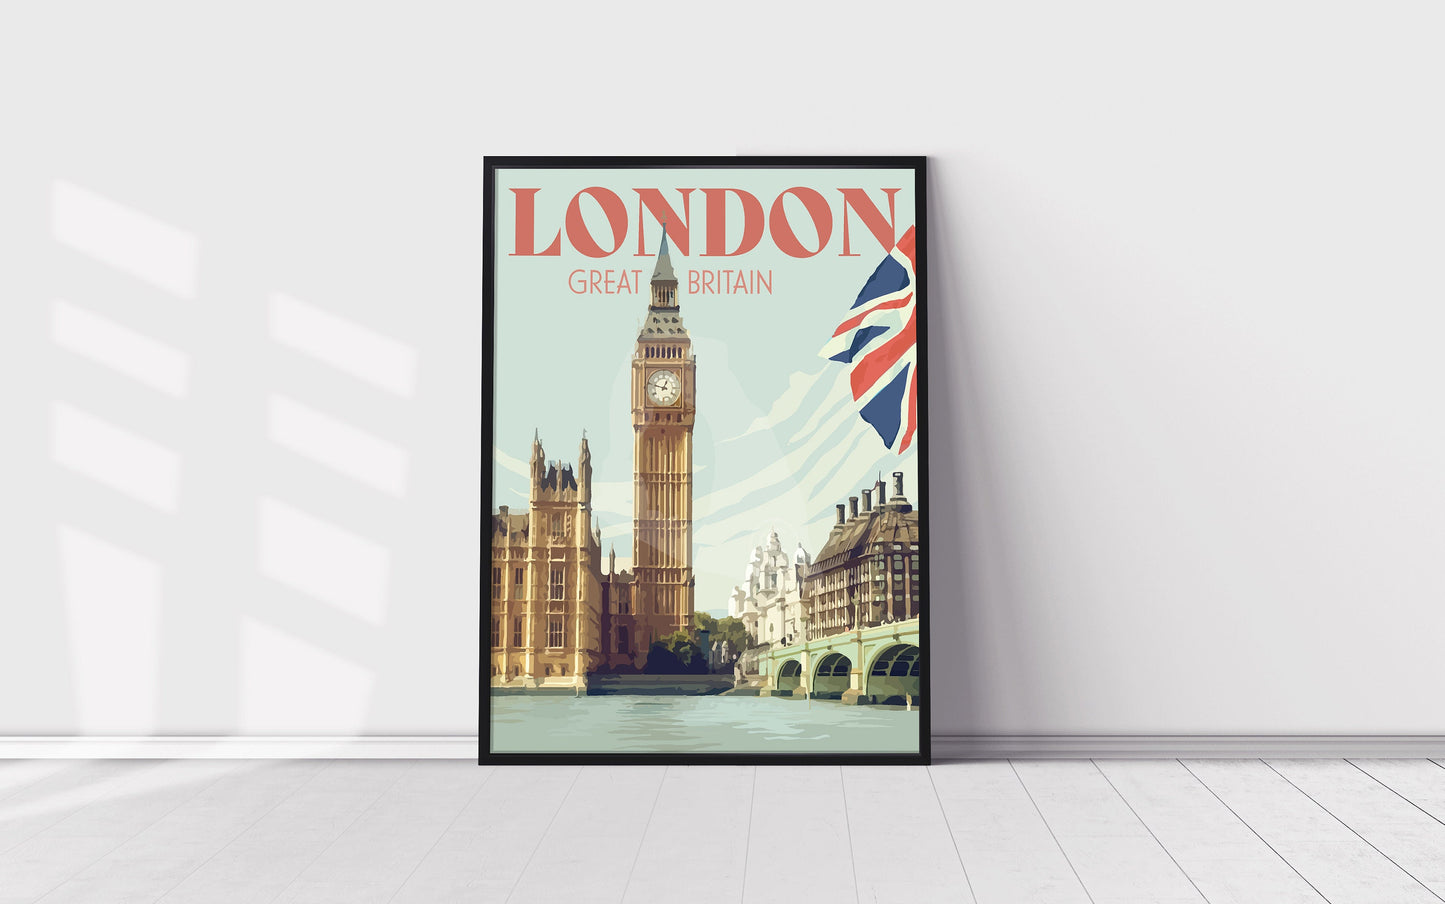 London England Print, London Big Ben Poster, London Great Britain Print, Vintage Style Travel Art